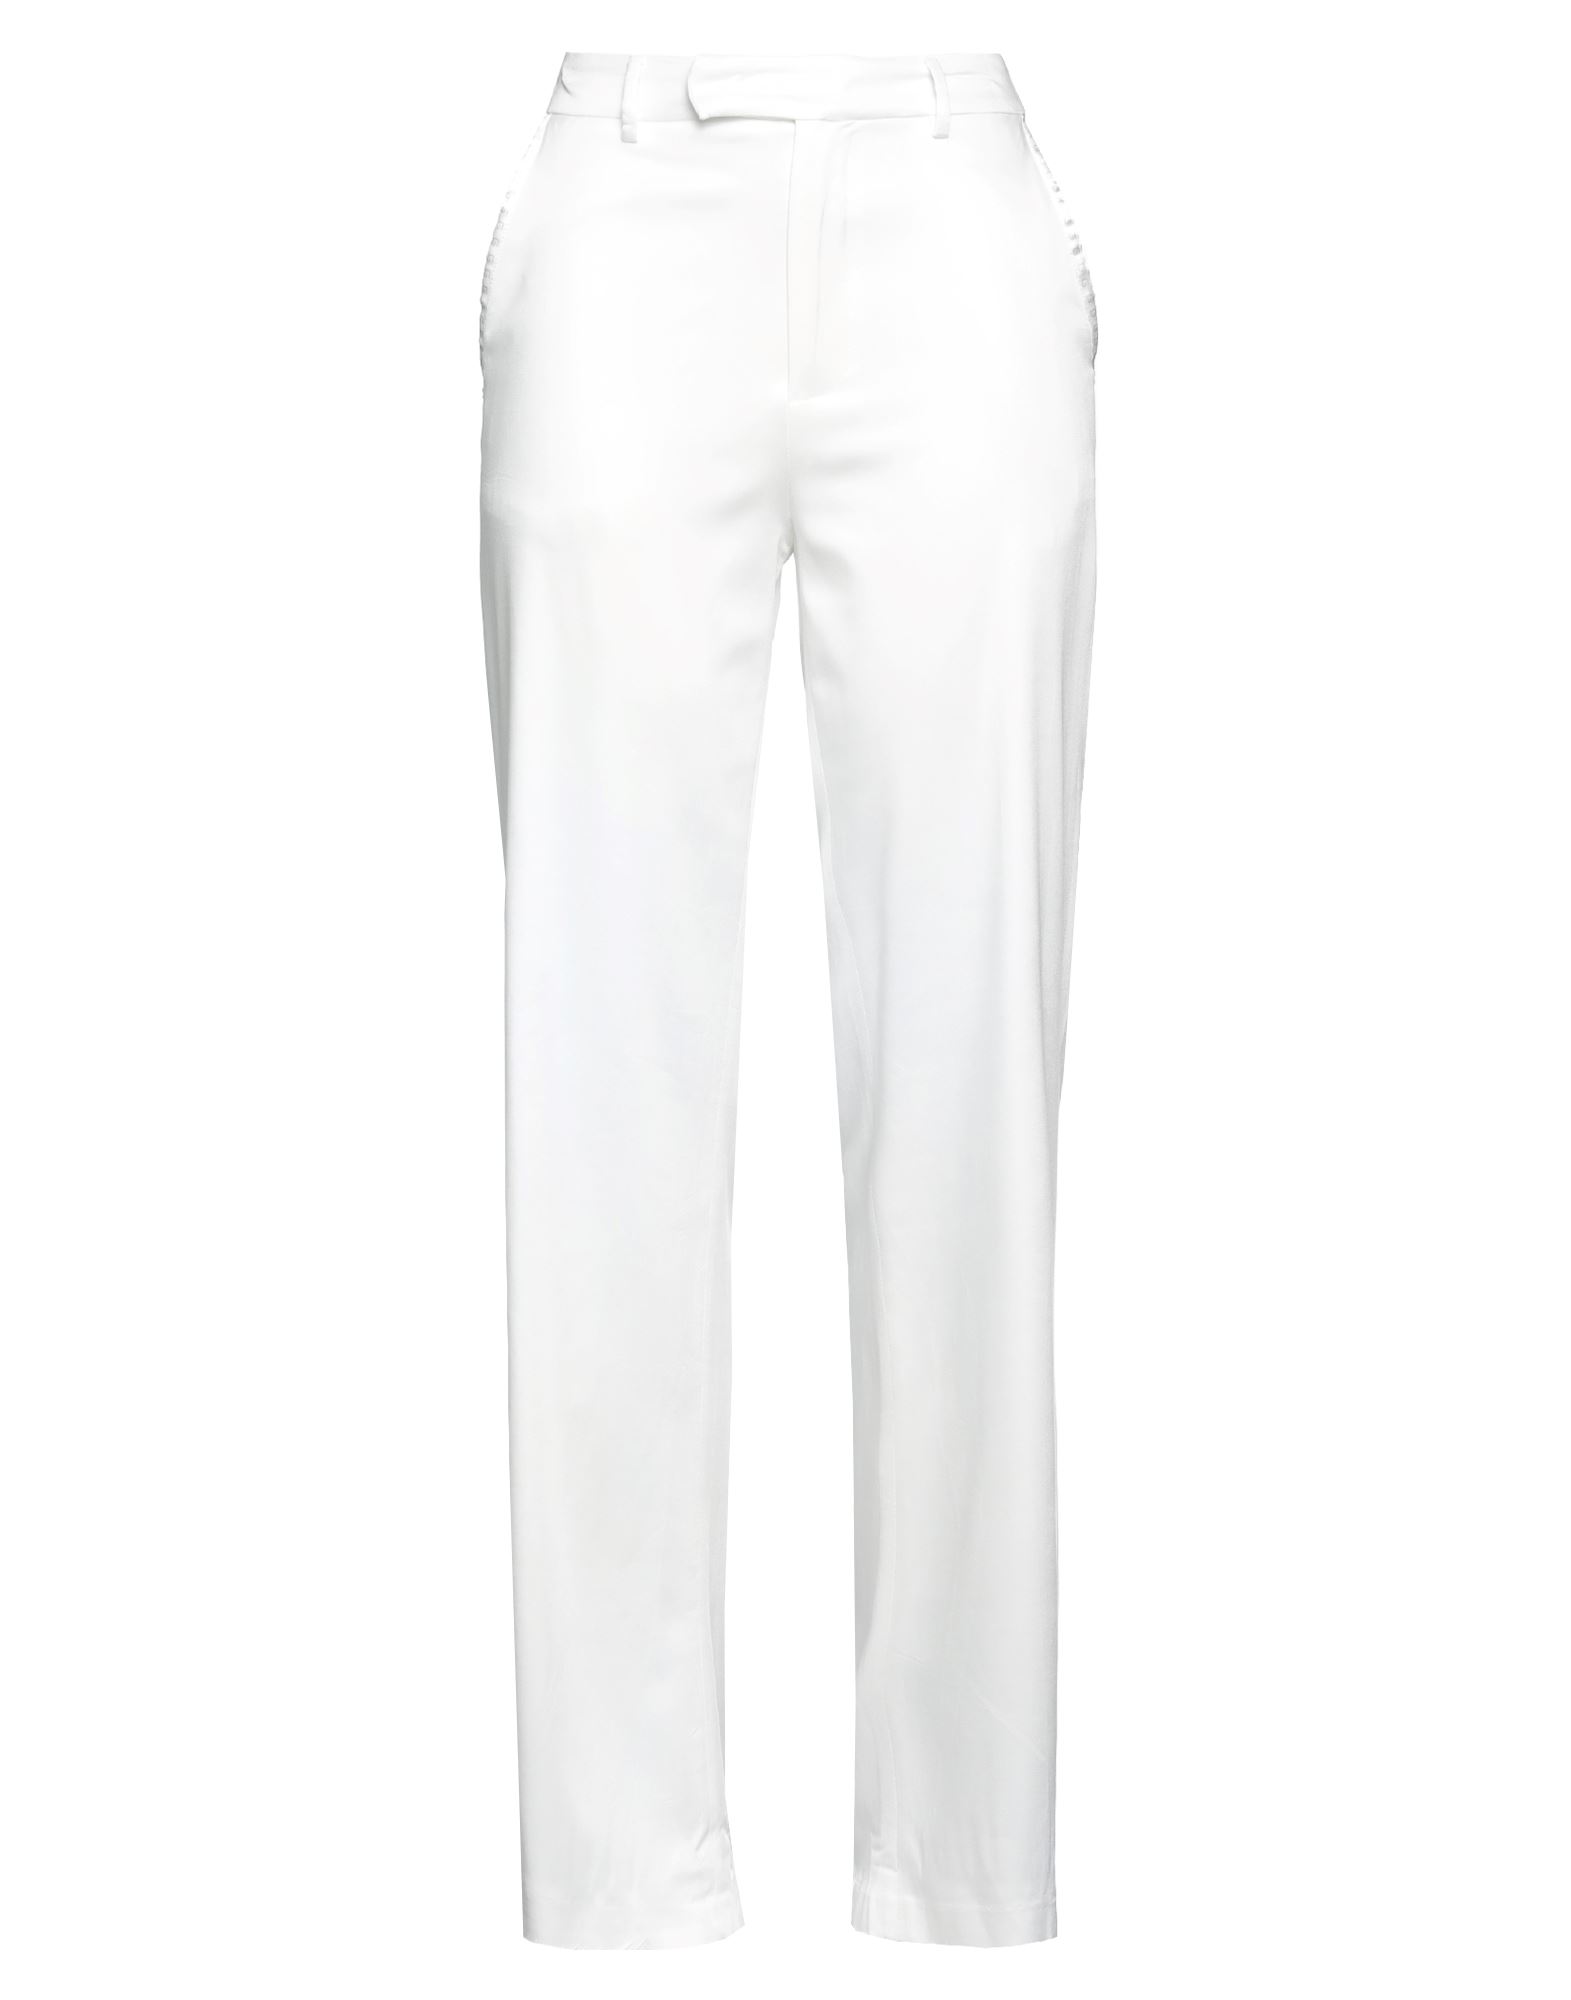 Gaelle Paris Pants In White